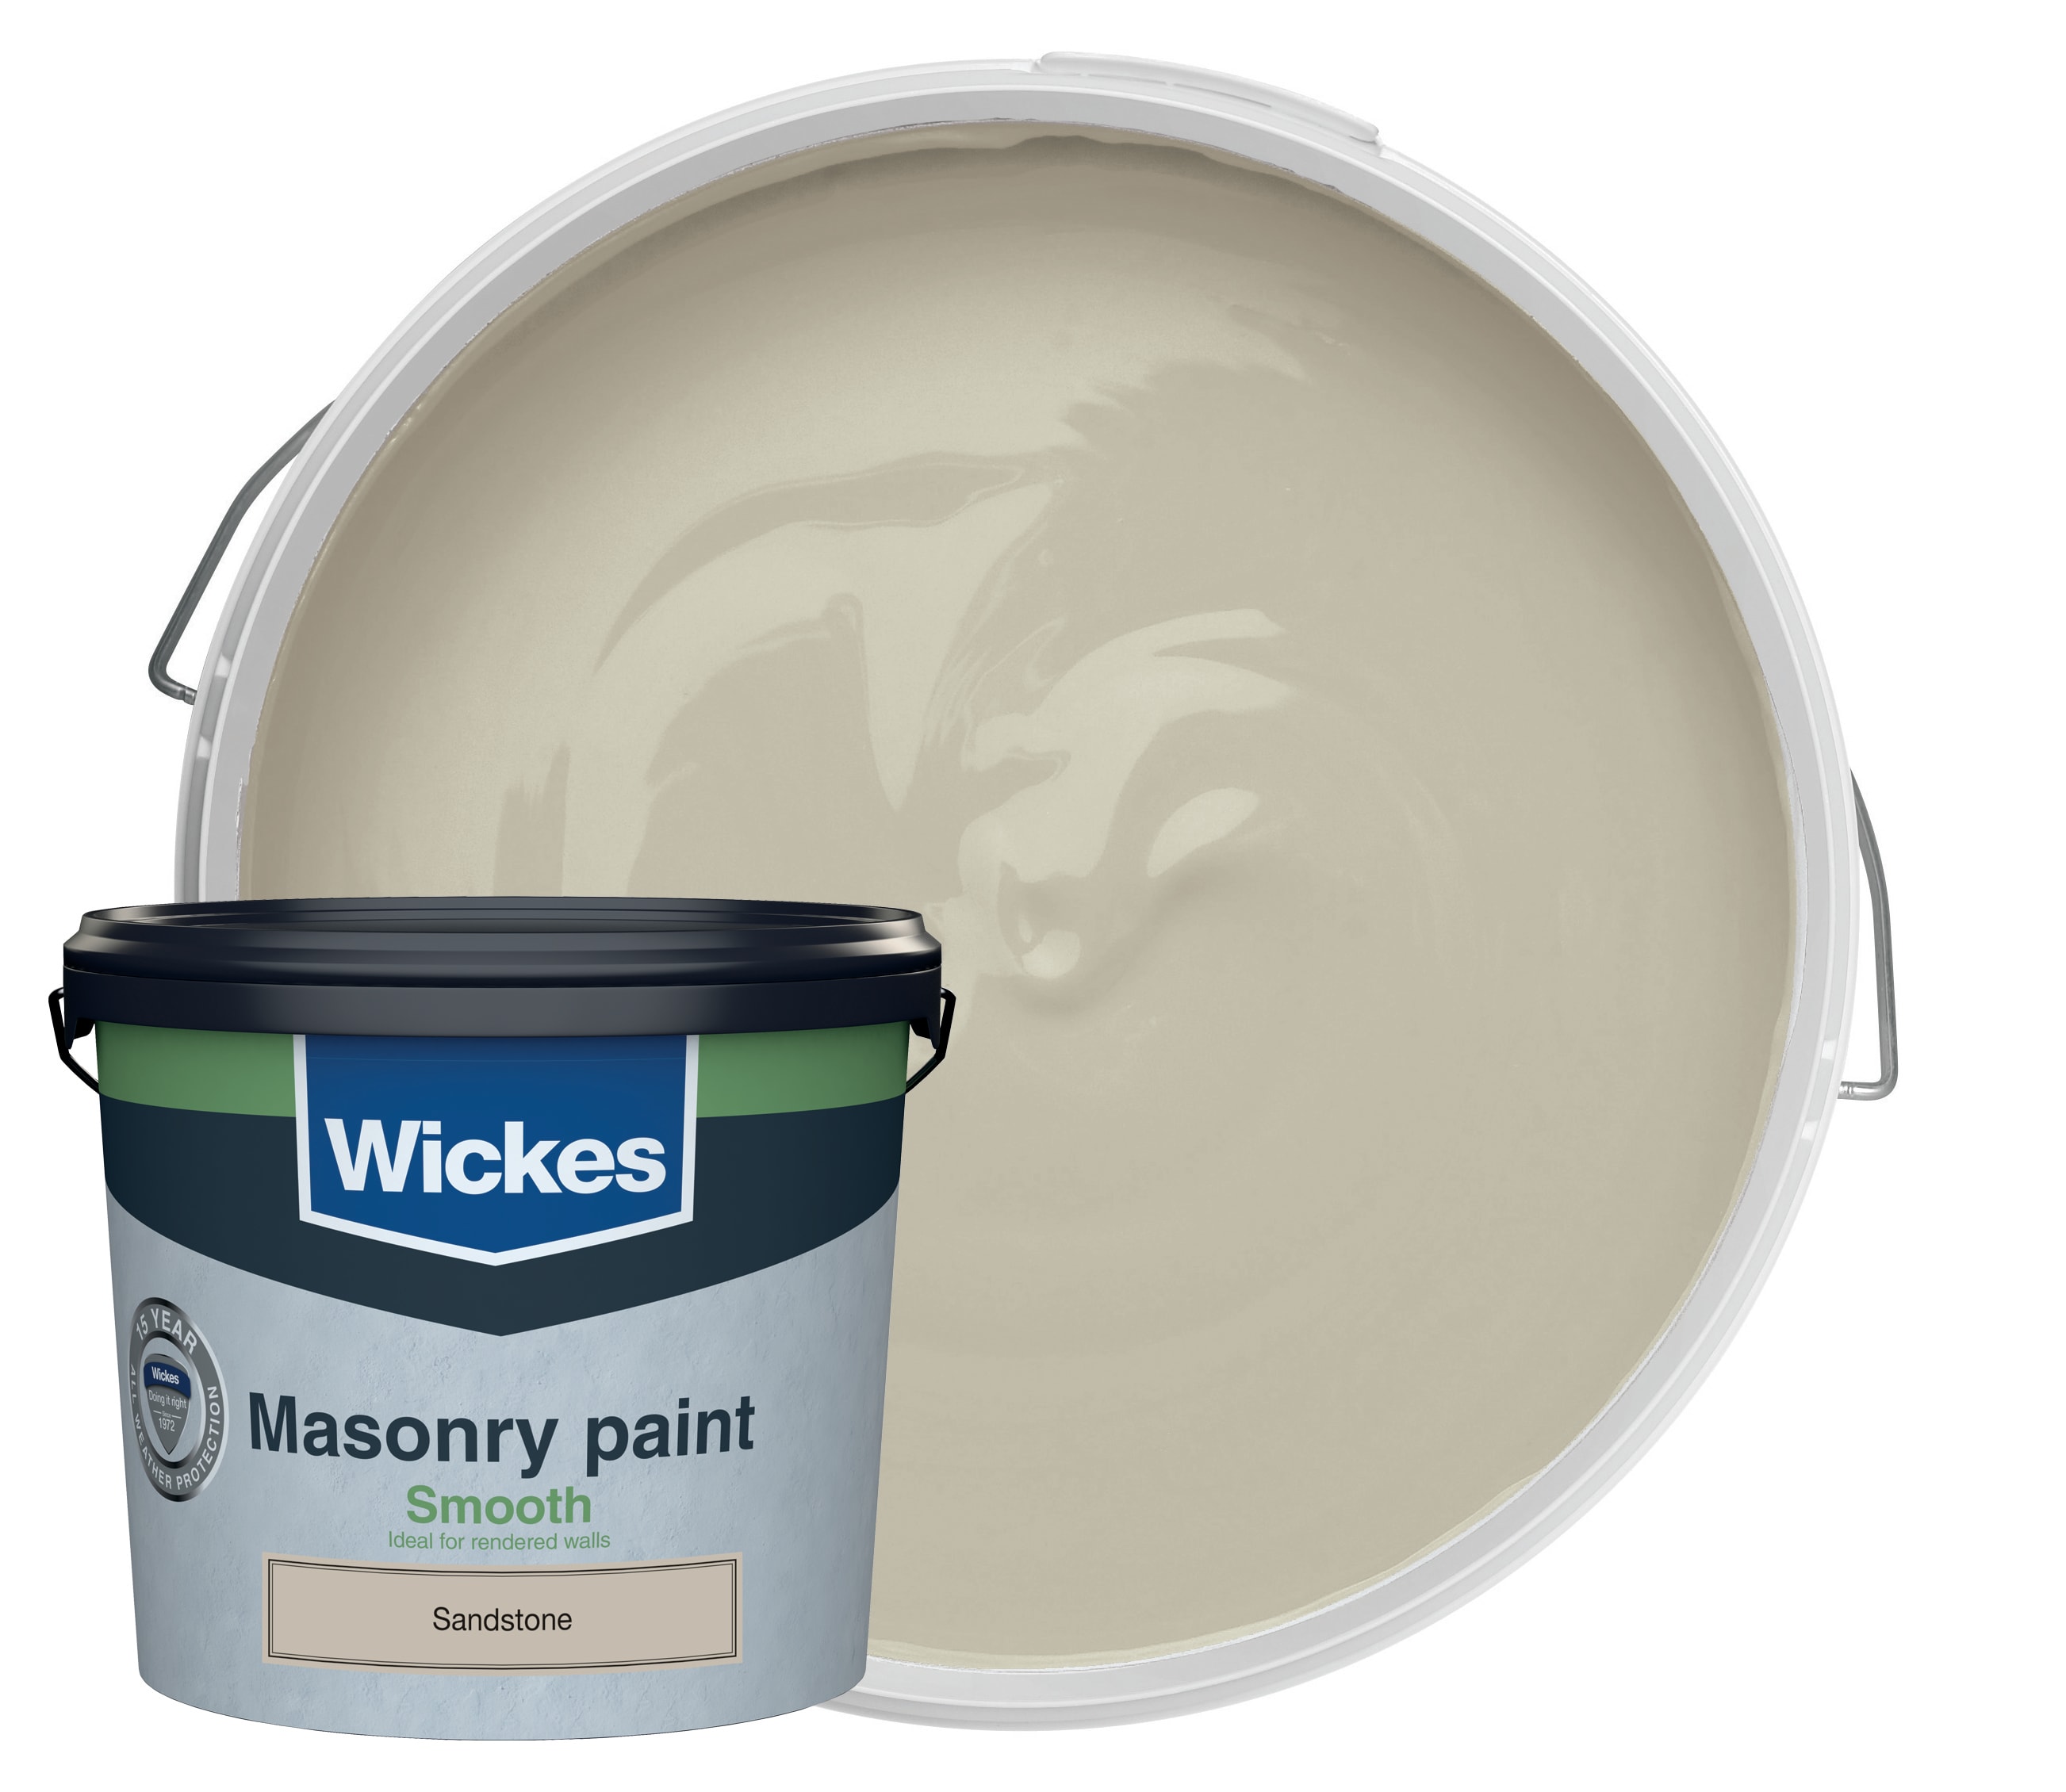 Wickes Masonry Smooth Paint - Sandstone 5L